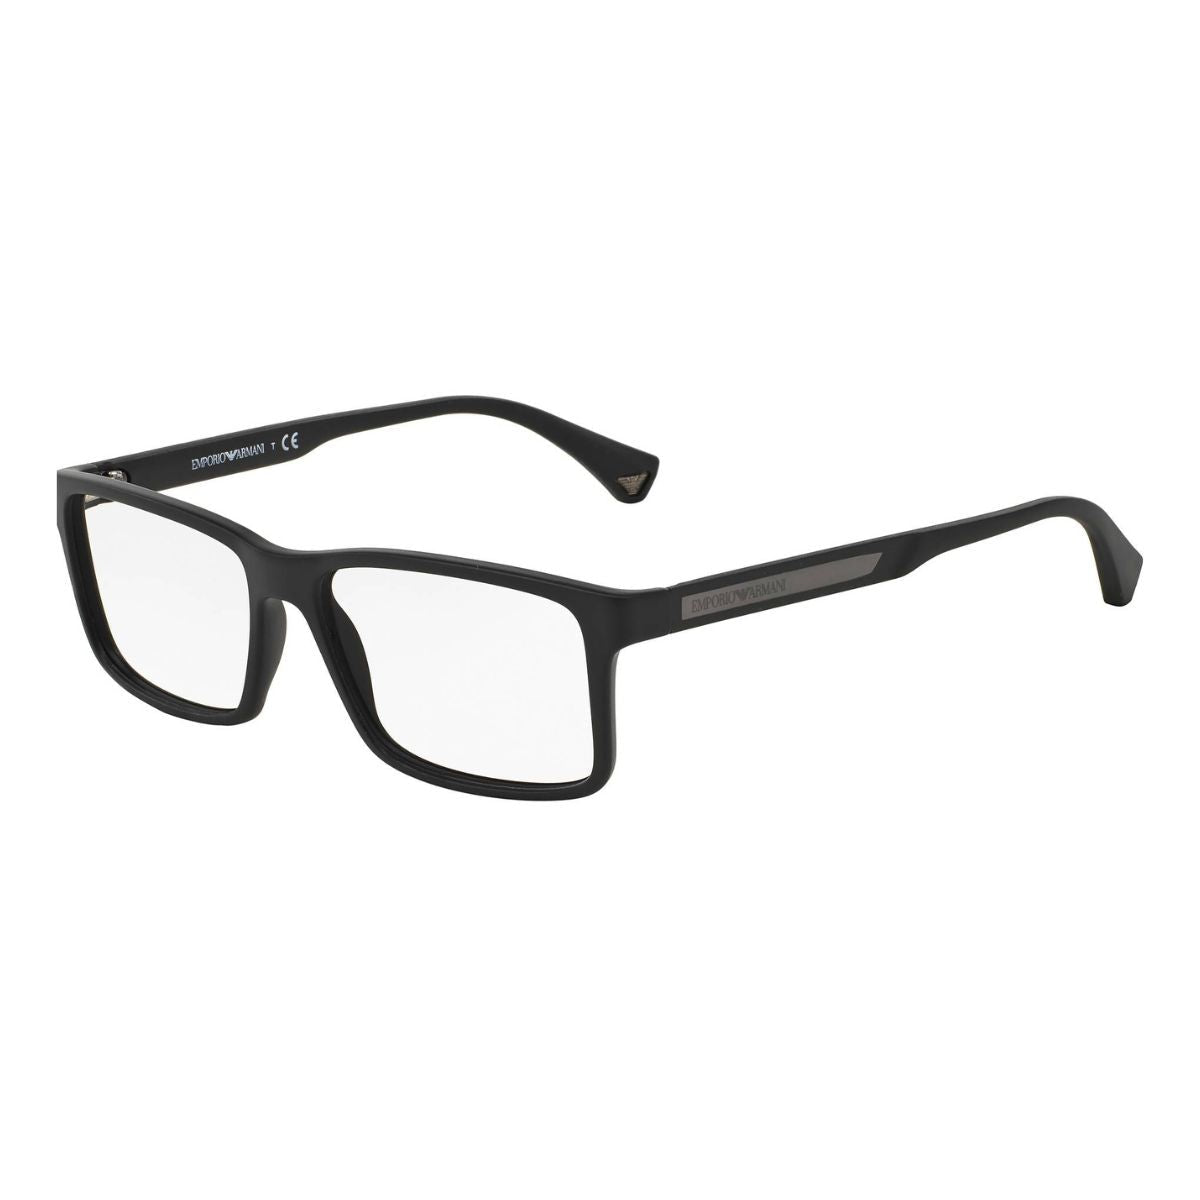 "Shop Emporio Armani 3038 5063 Prescription Eyewear Frame For Men's At Optorium"